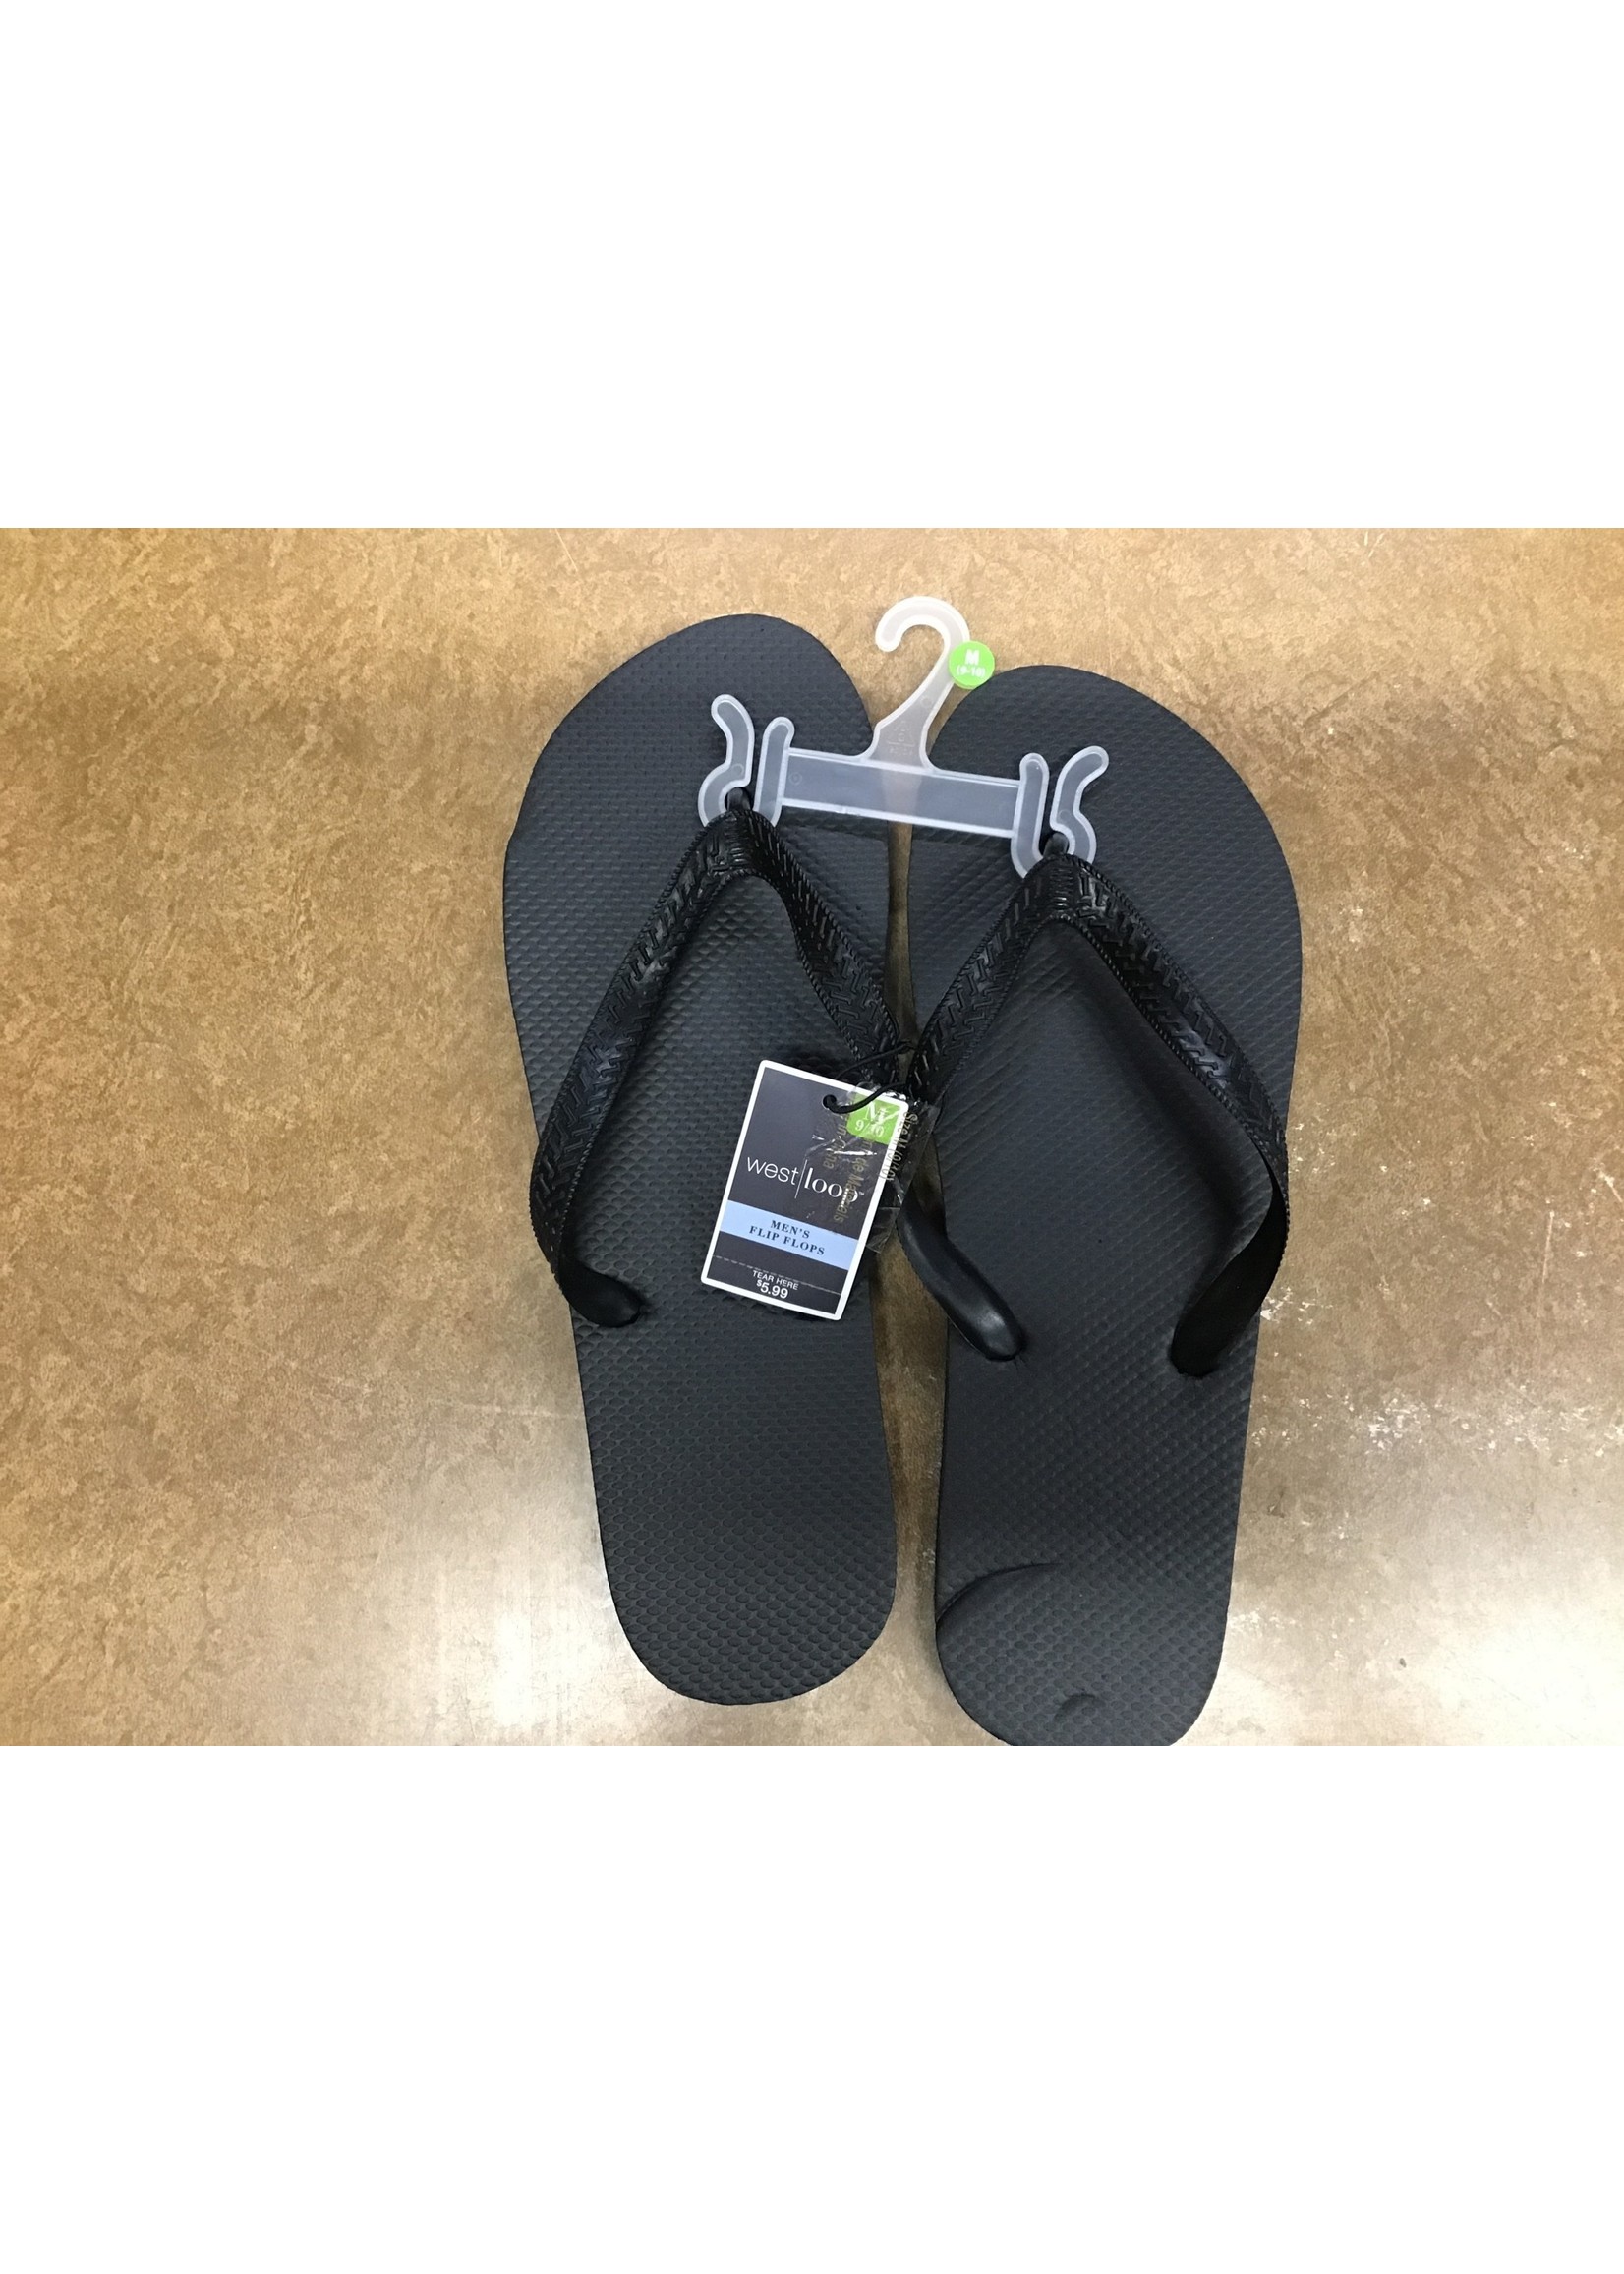 *Dented West Loop Men’s Flip Flops Sandals Black M 9-10